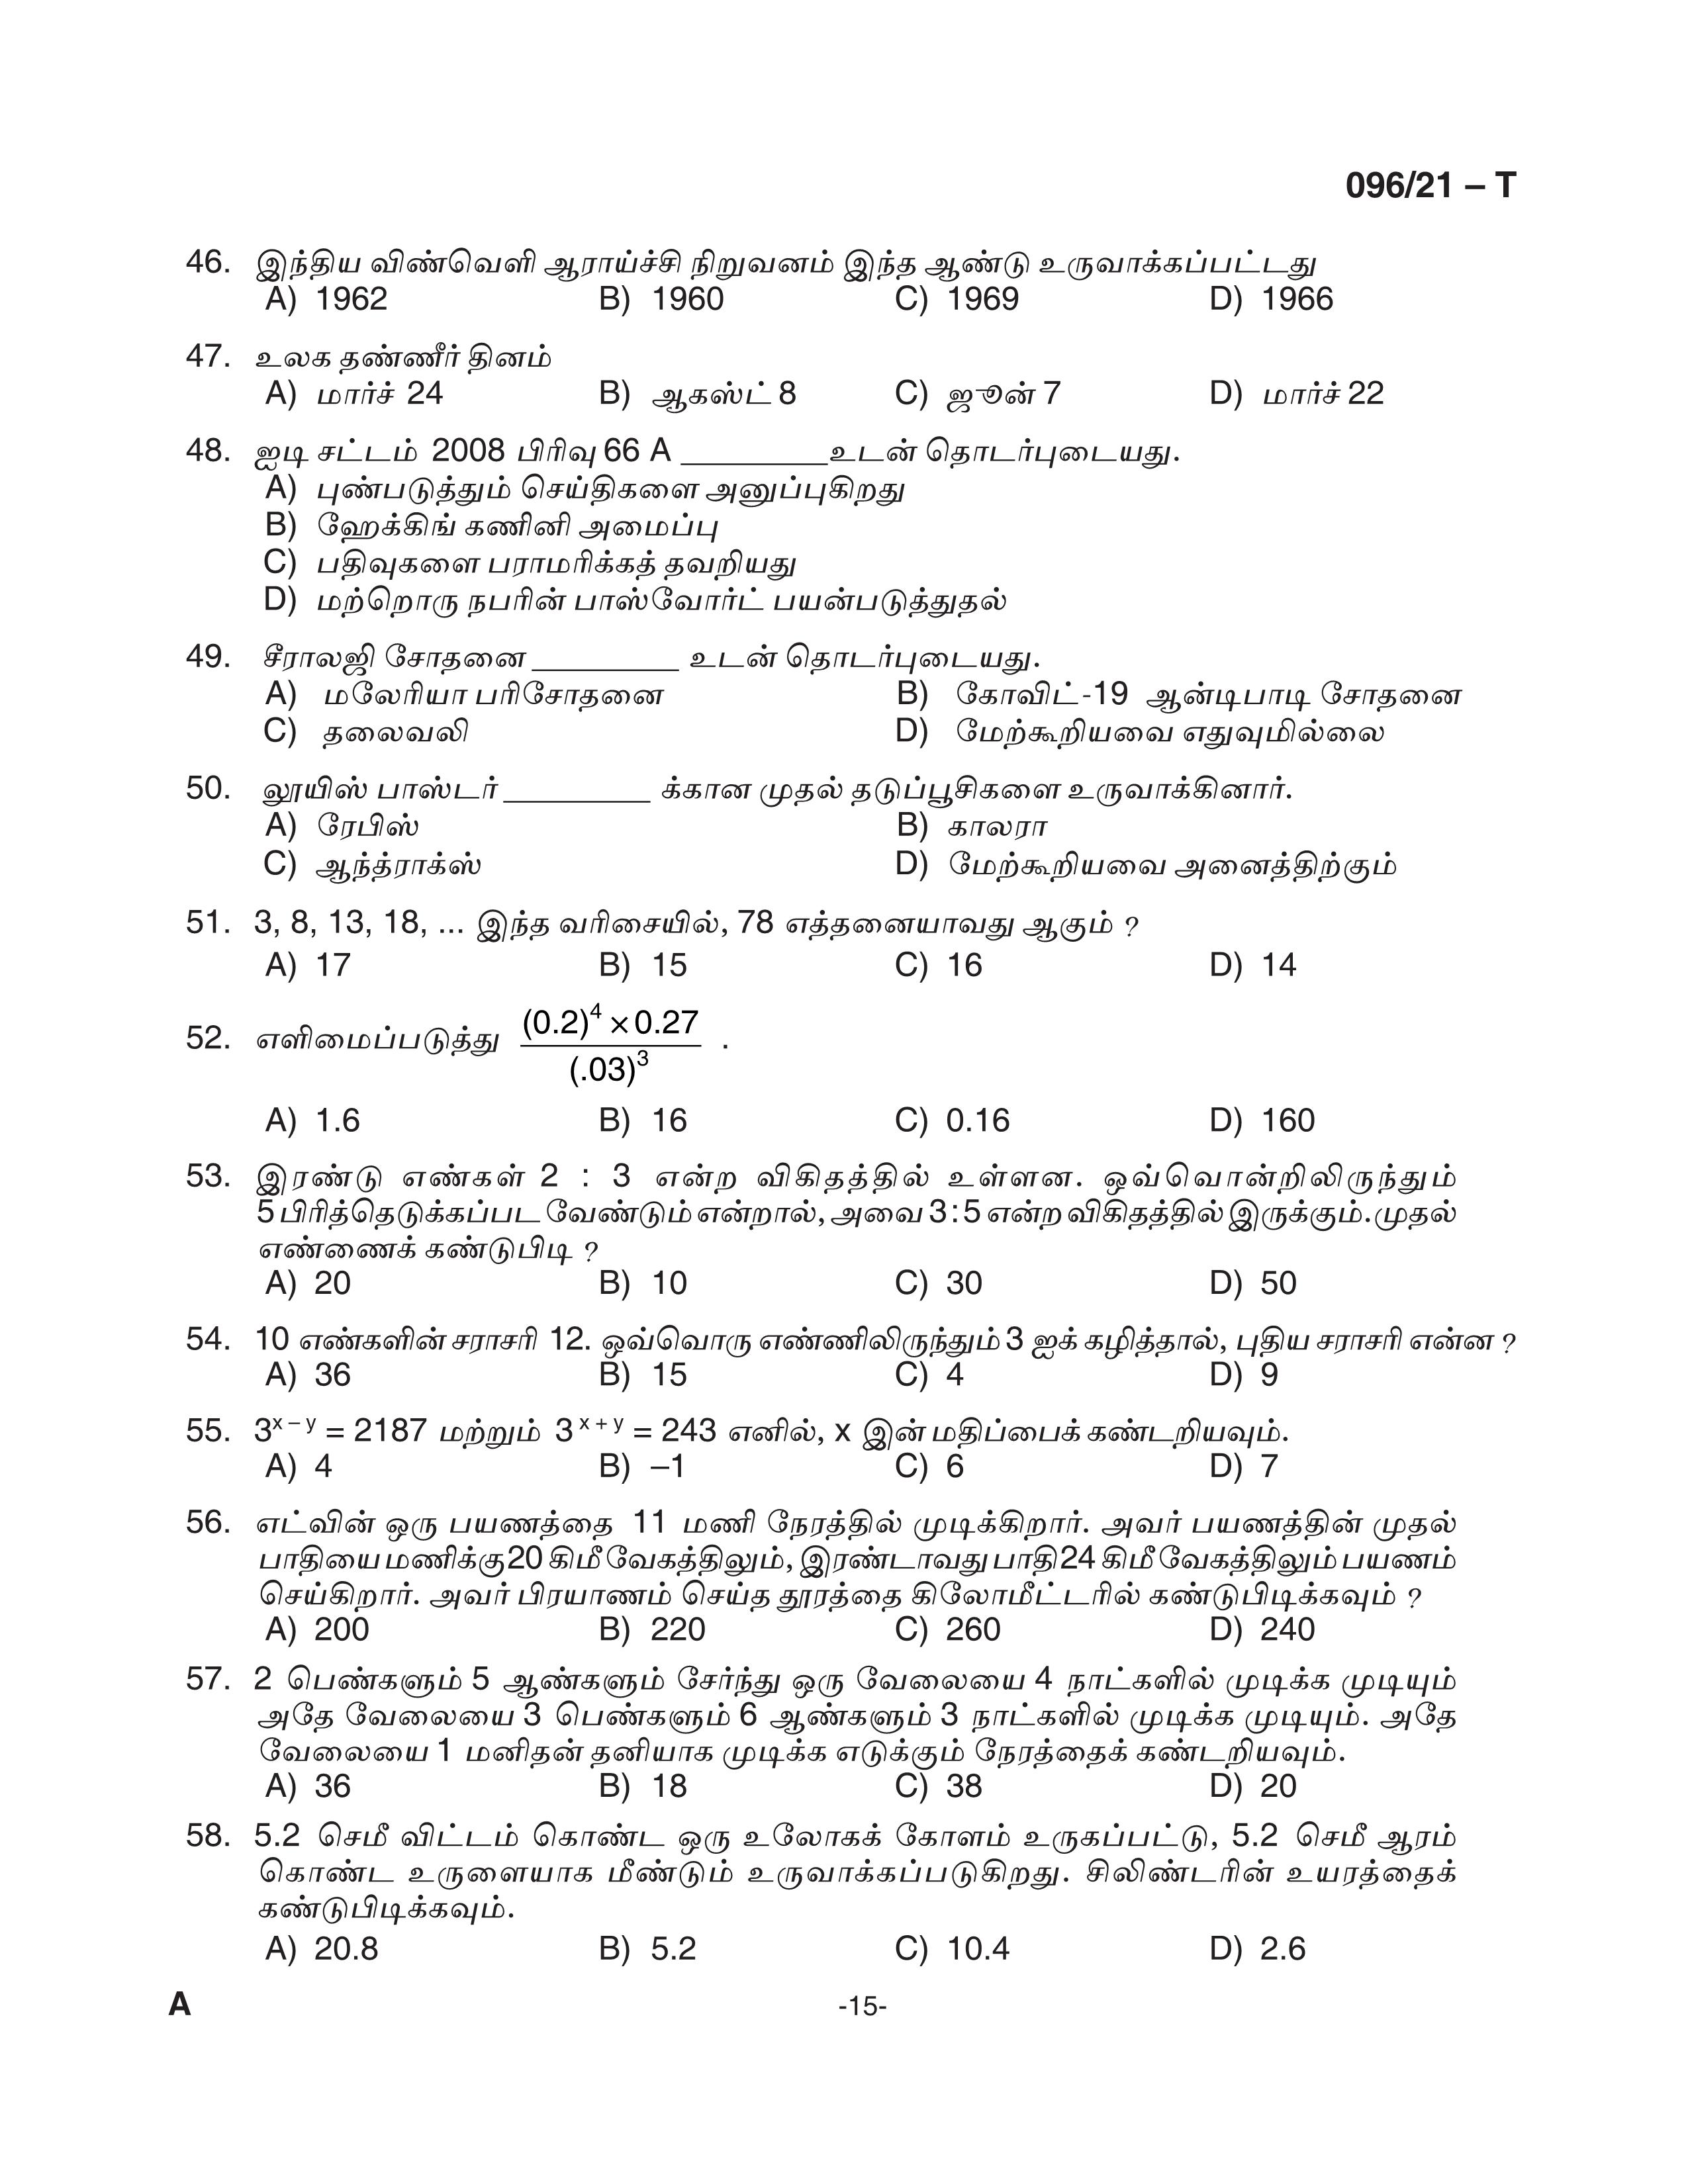 KPSC Degree Level Preliminary Exam Stage II Tamil Exam 2021 Code 09621 T 15